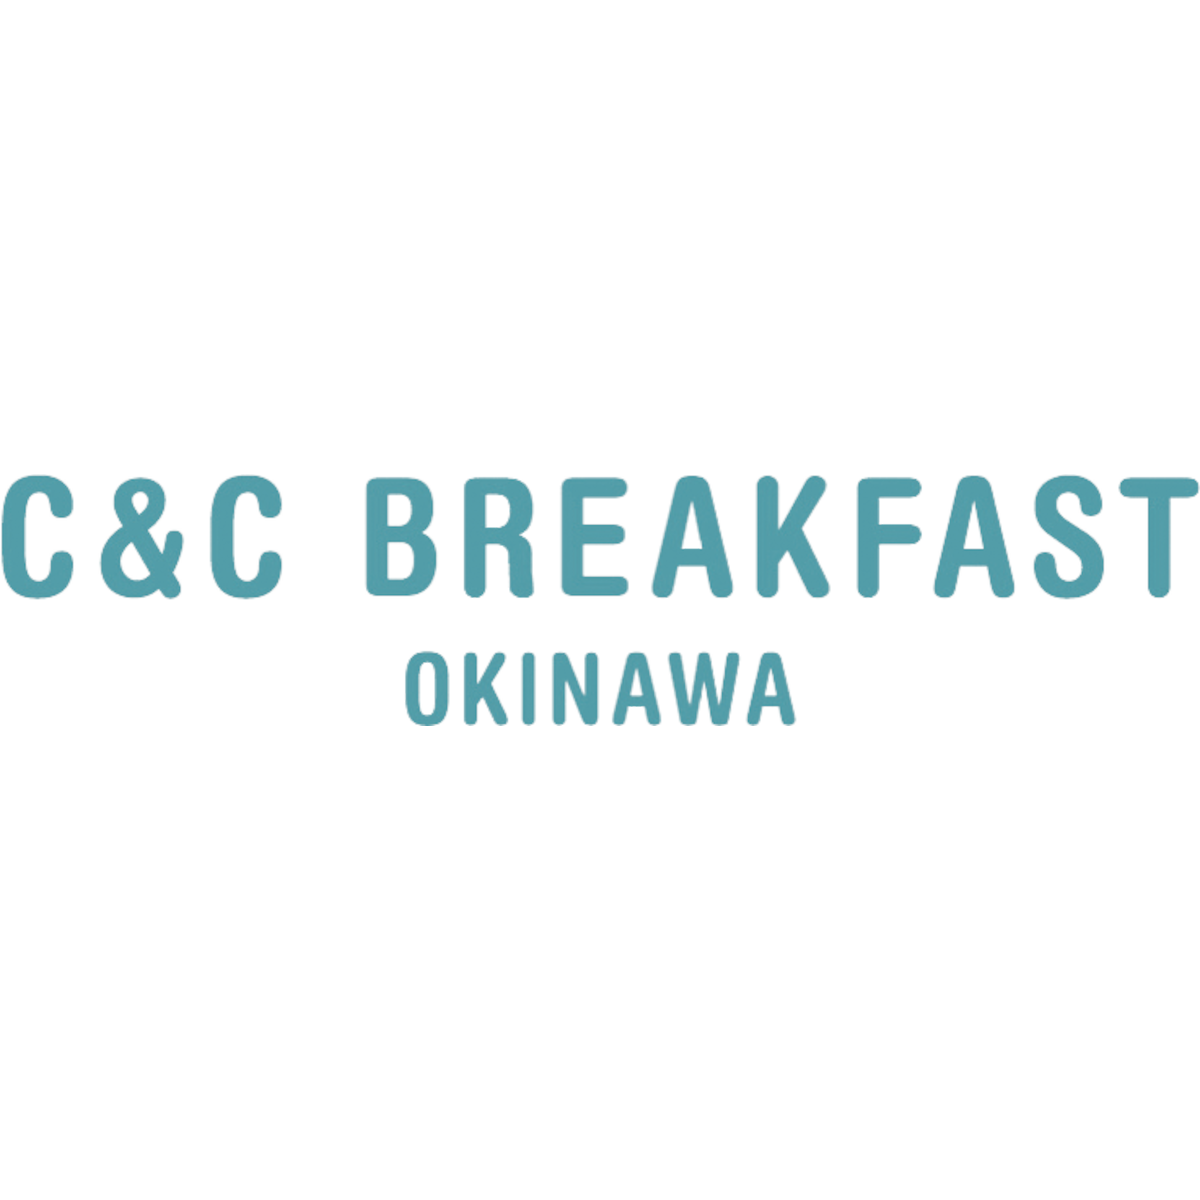 C&C BREAKFAST OKINAWA